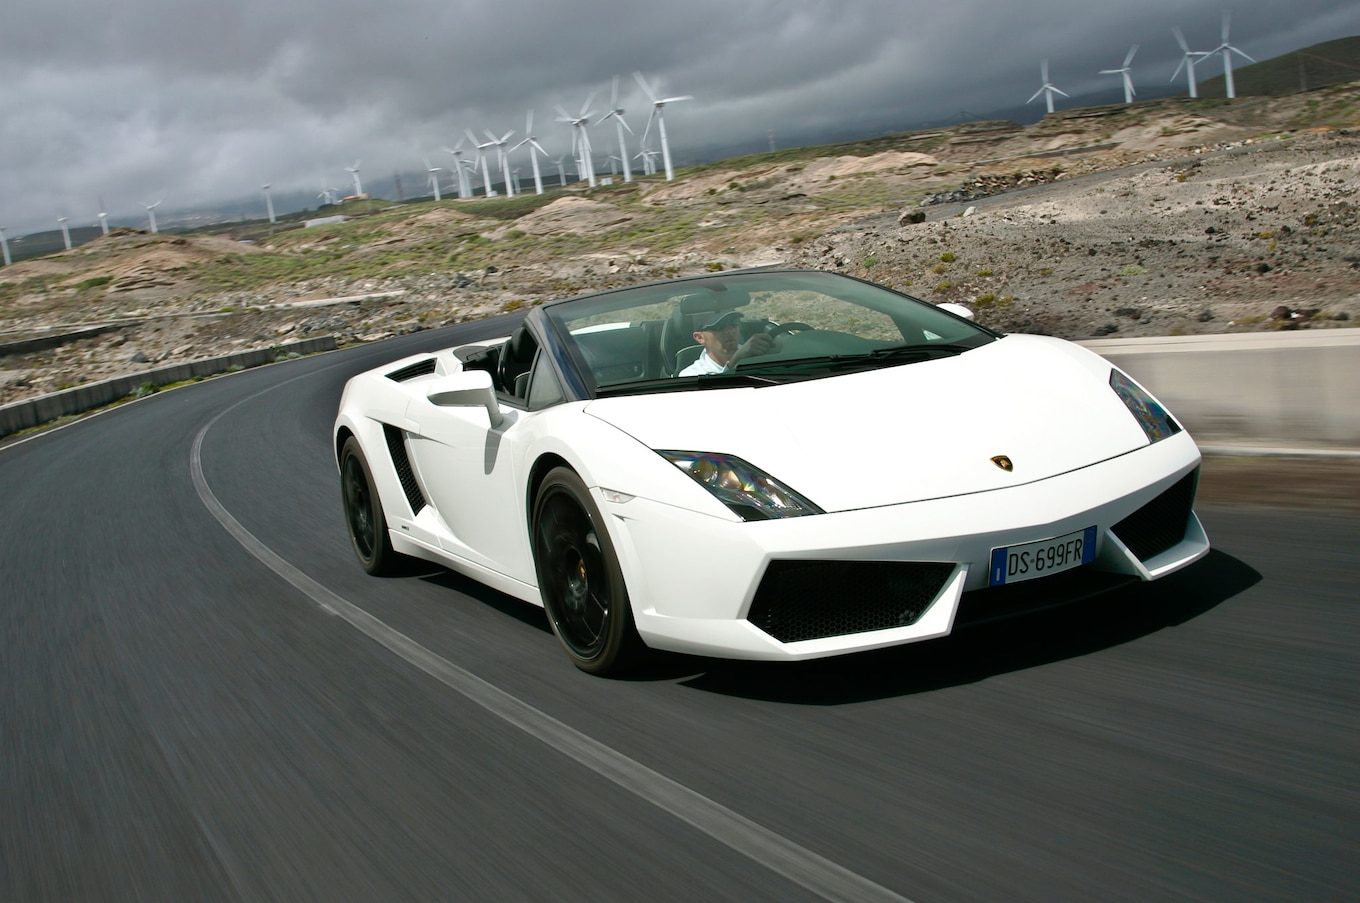 2013-Lamborghini-Gallardo-LP-560-4-Spyder-Convertible-Front-Three-Quarters-View-In-Motion-07.jpg